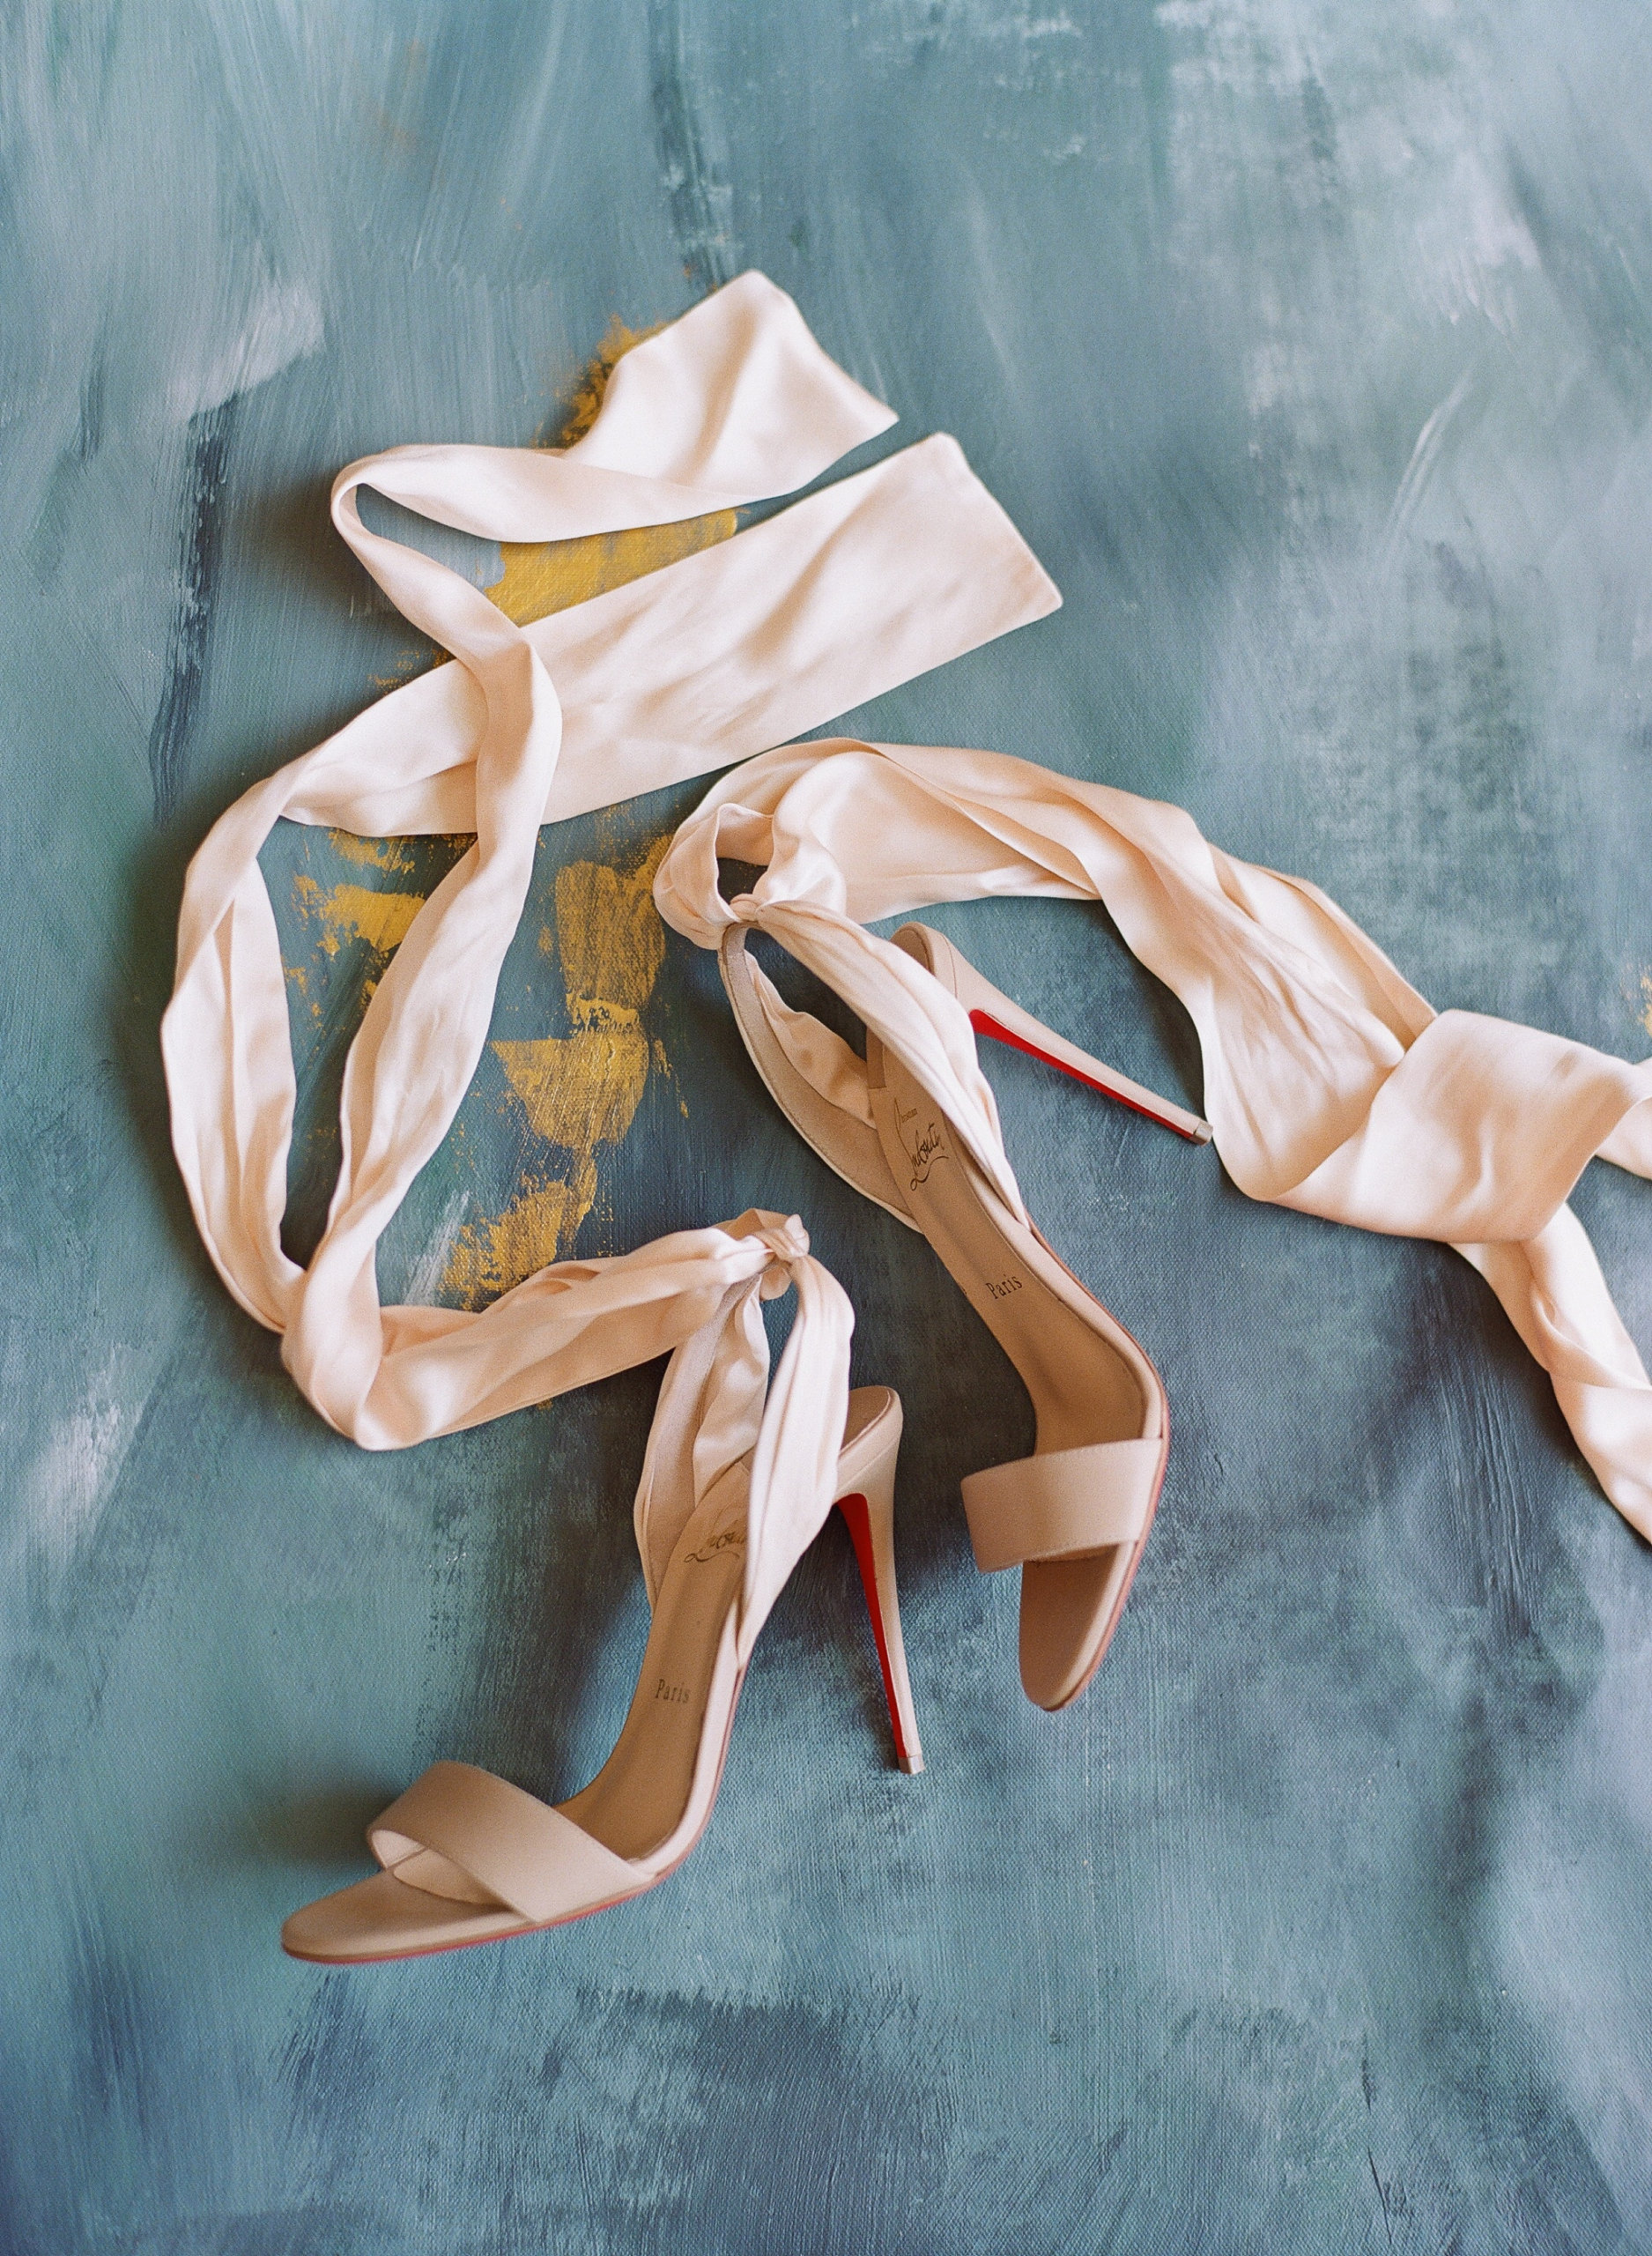 Bridal wedding heels with ribbon ties